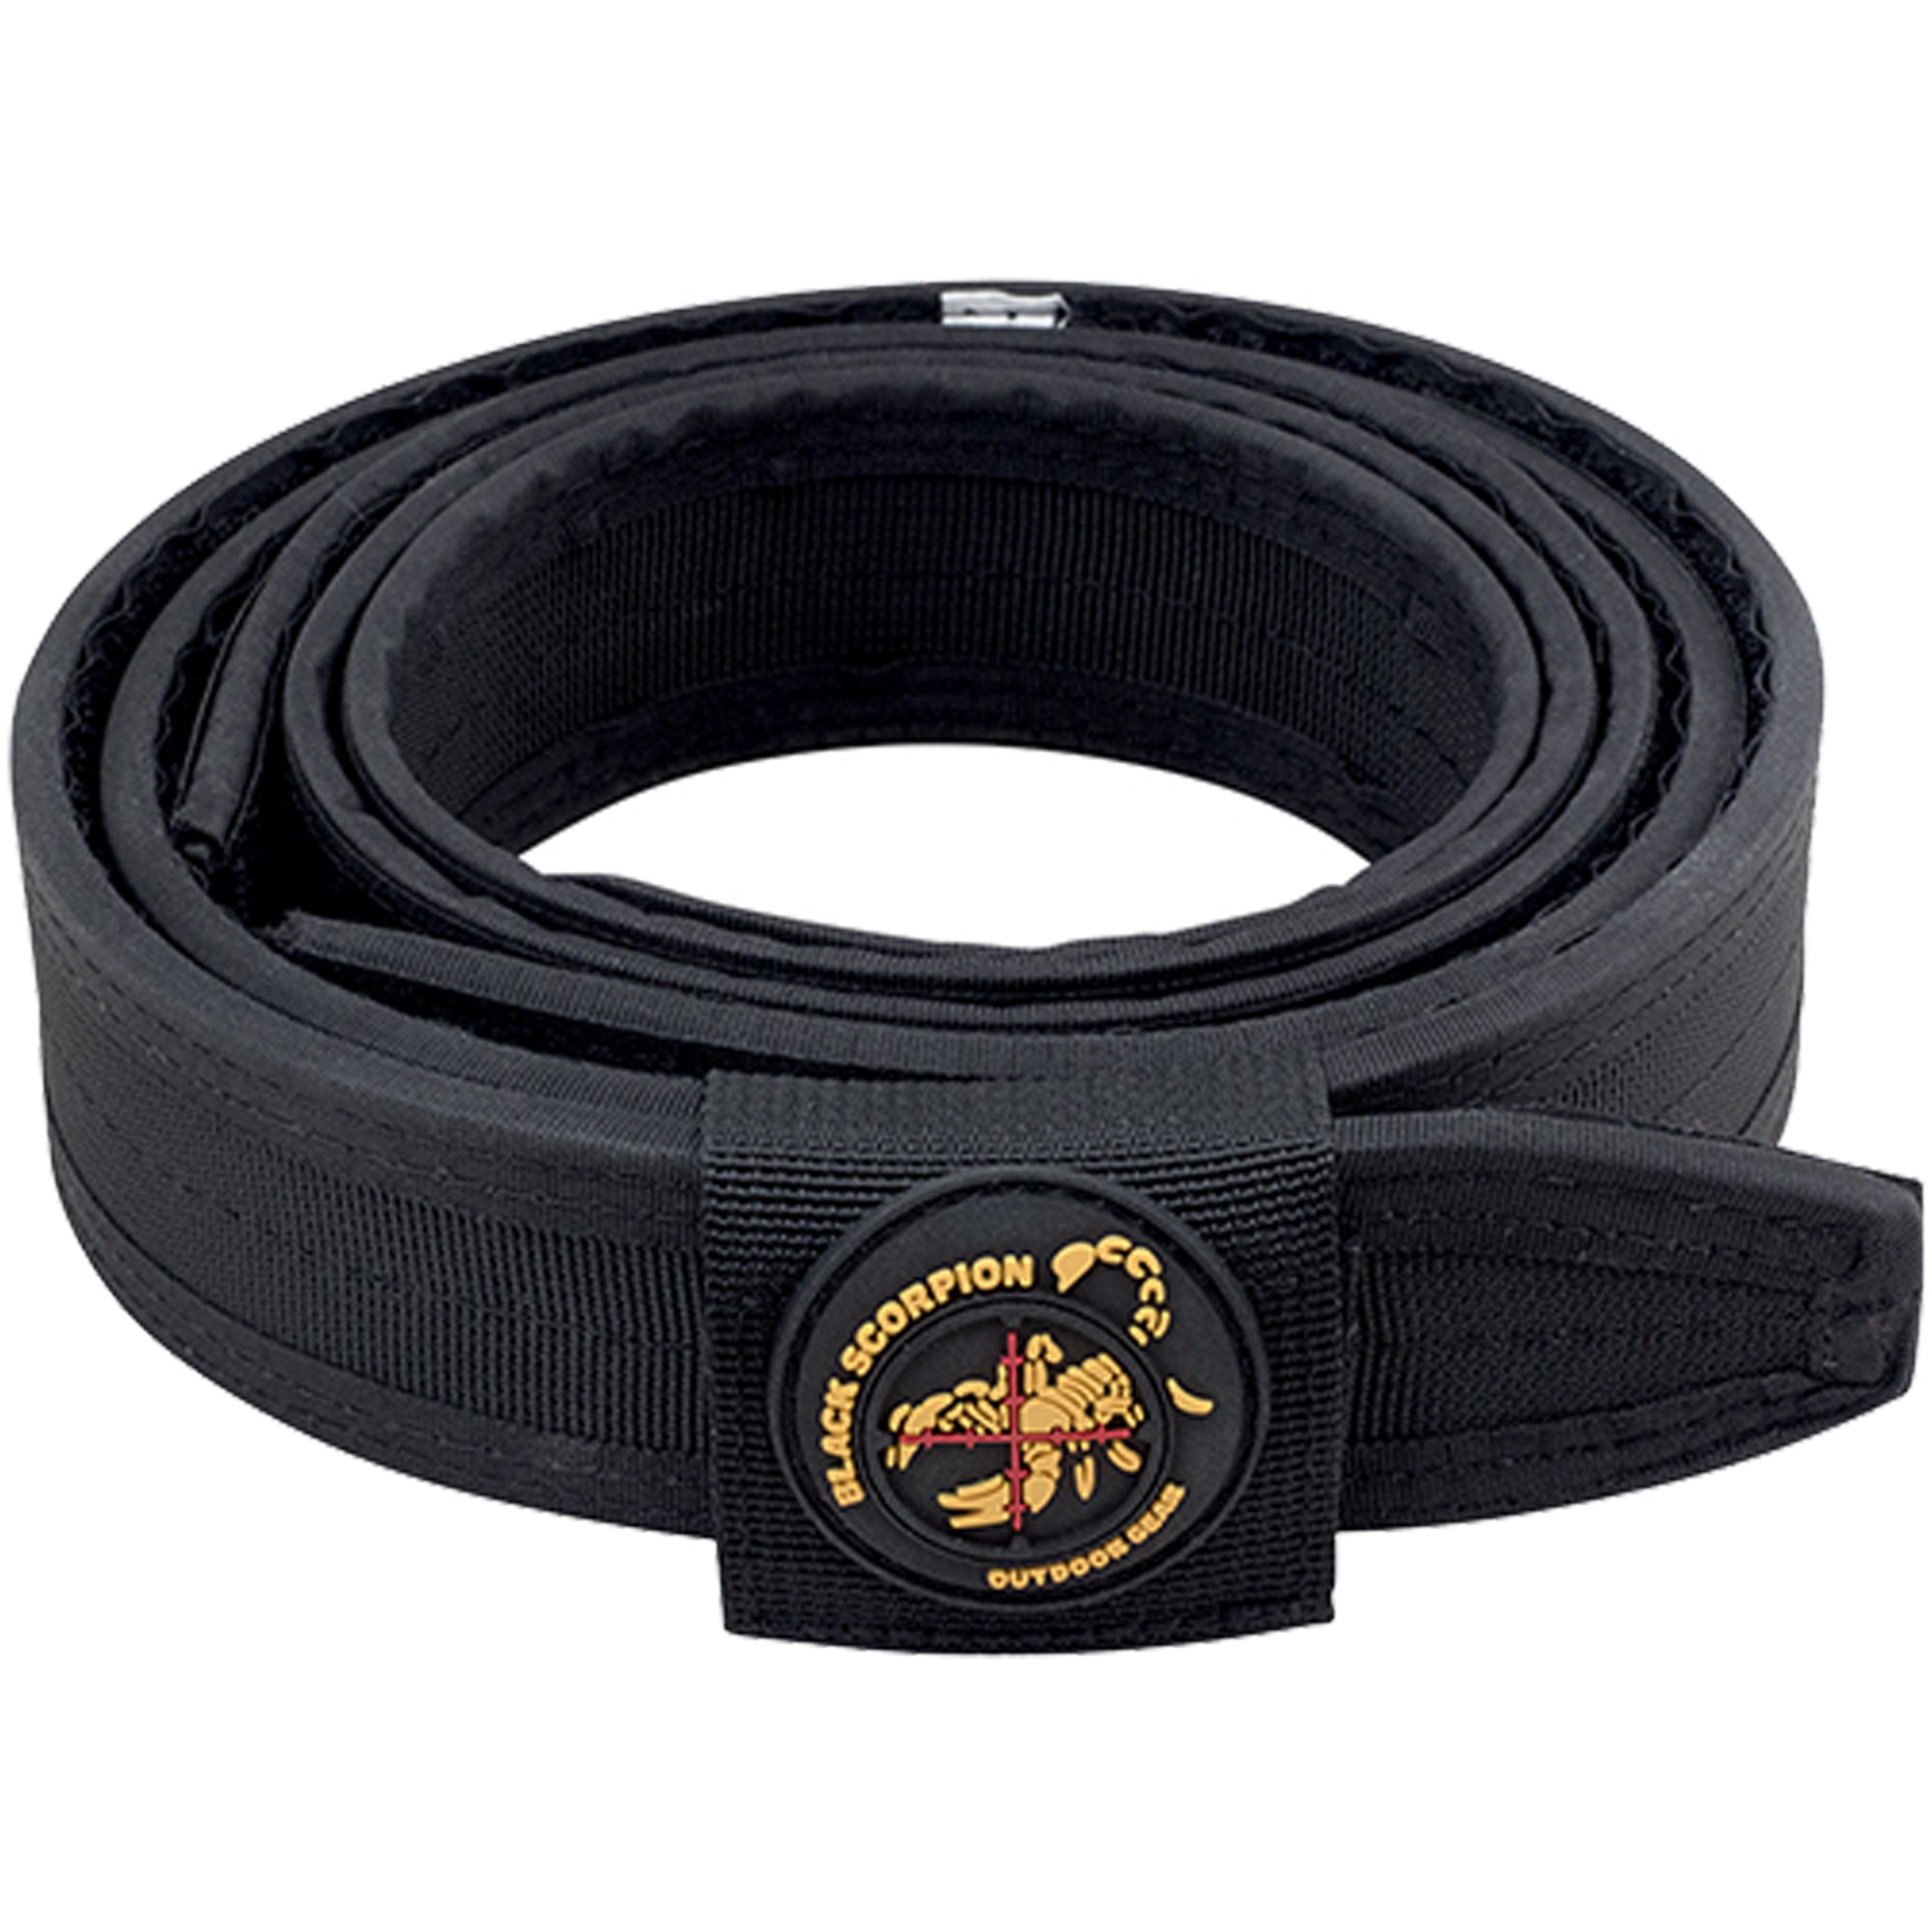 Cheap 1:1 Belts OnSale, Discount 1:1 Belts Free Shipping!